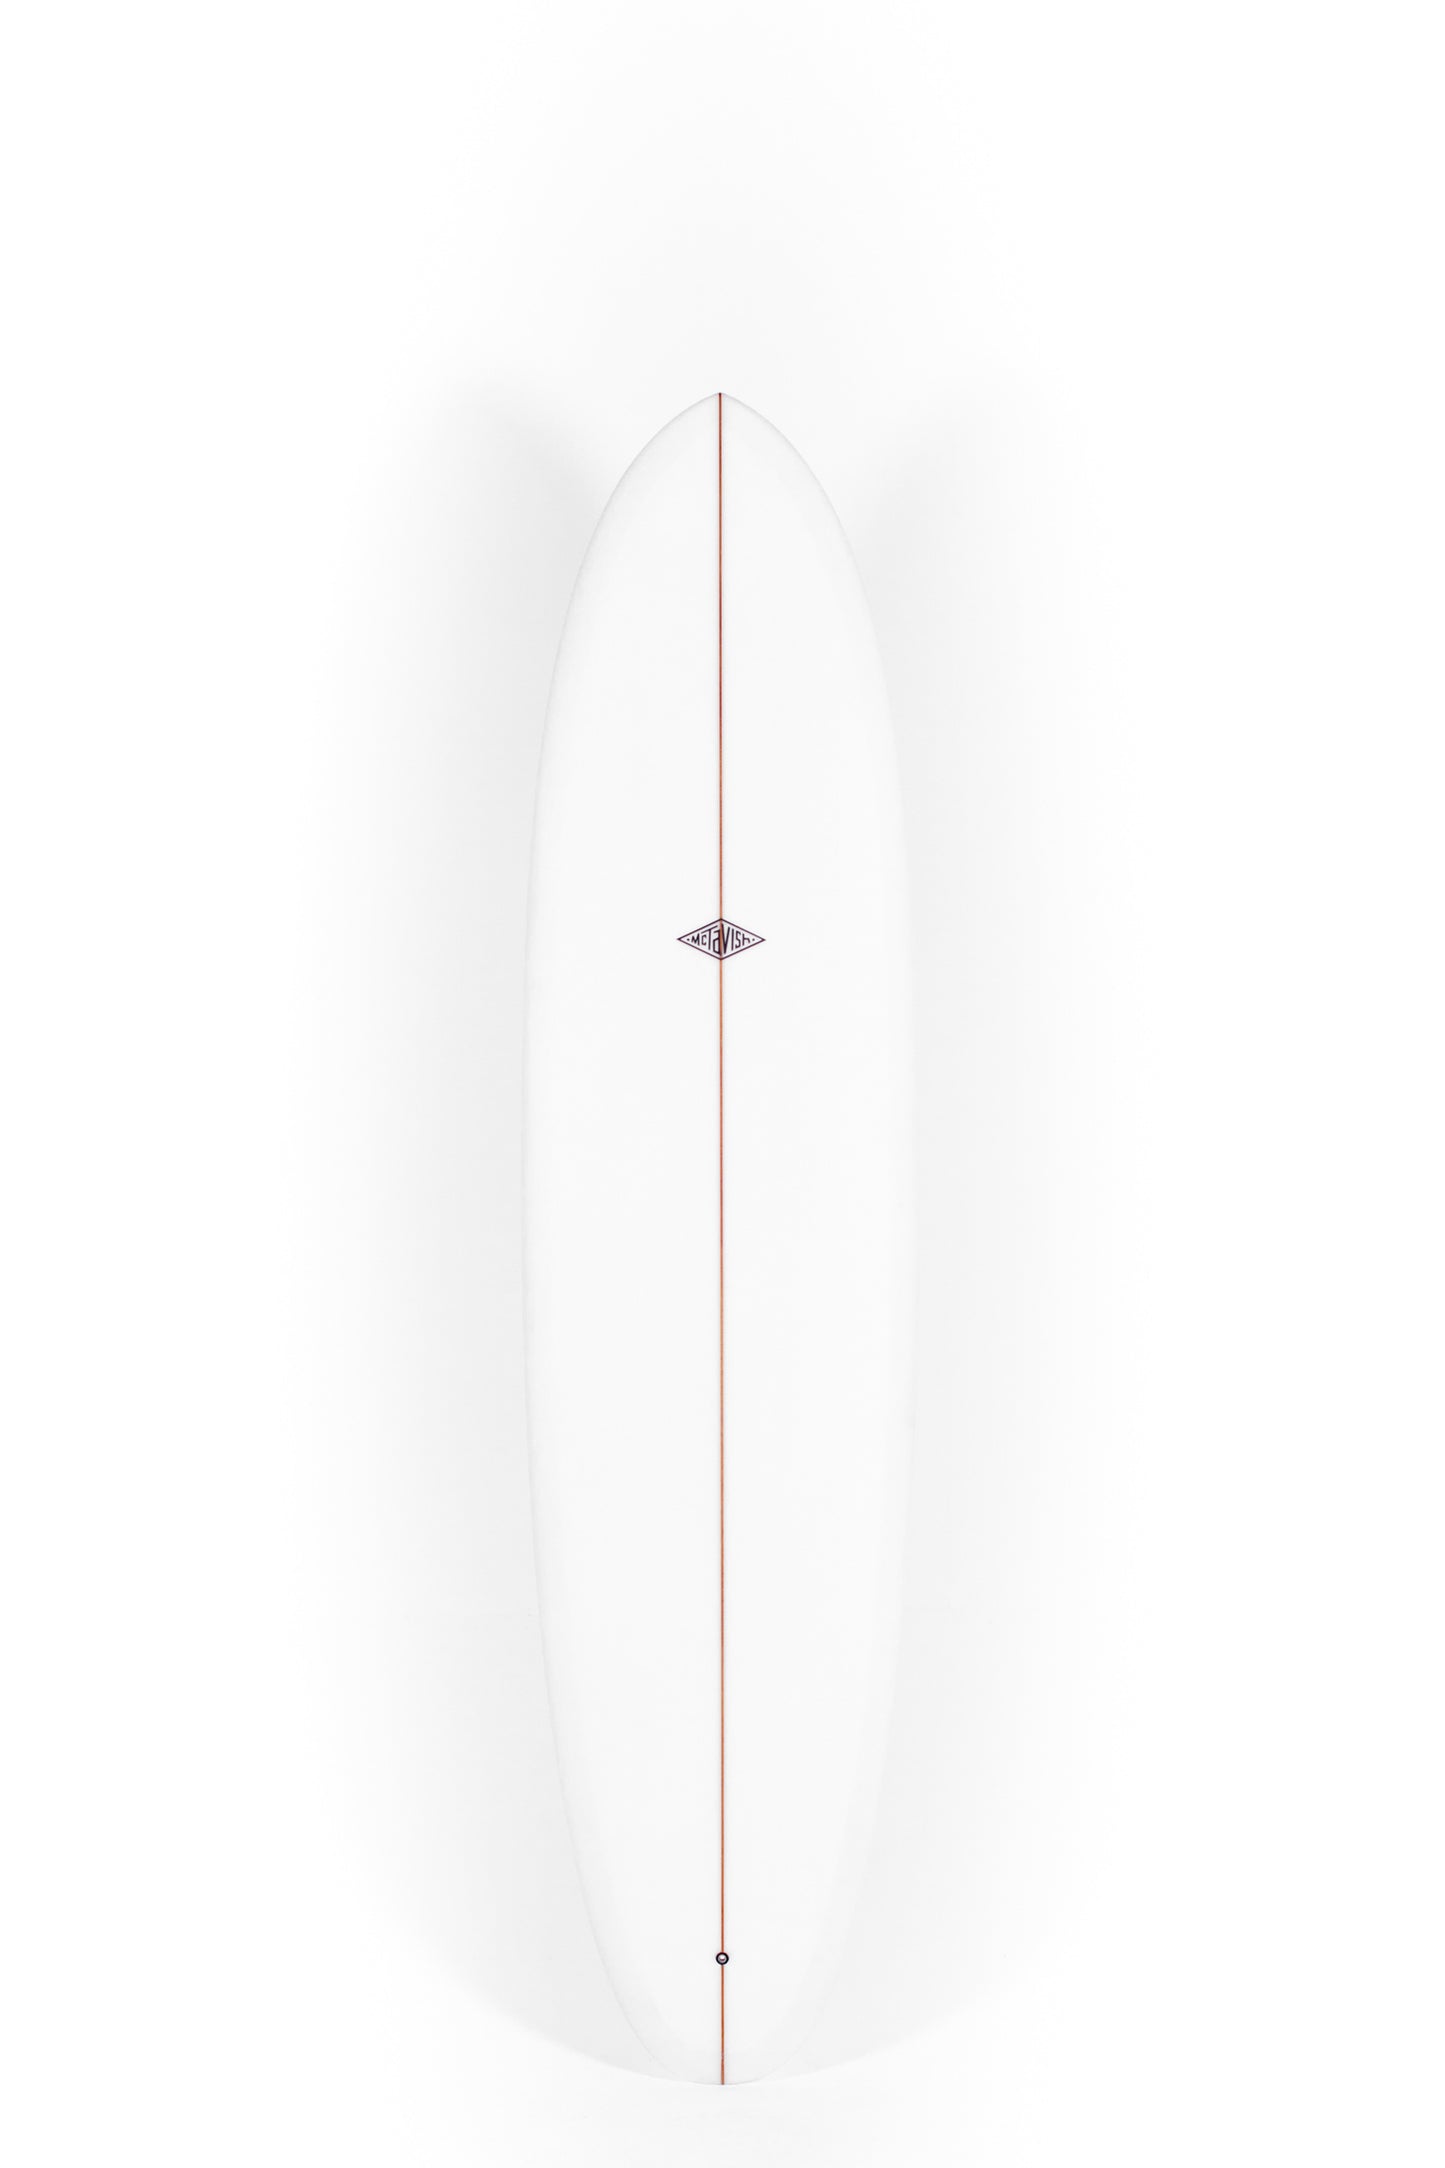 Pukas-Surf-Shop-McTavish-Surfboards-Rincon